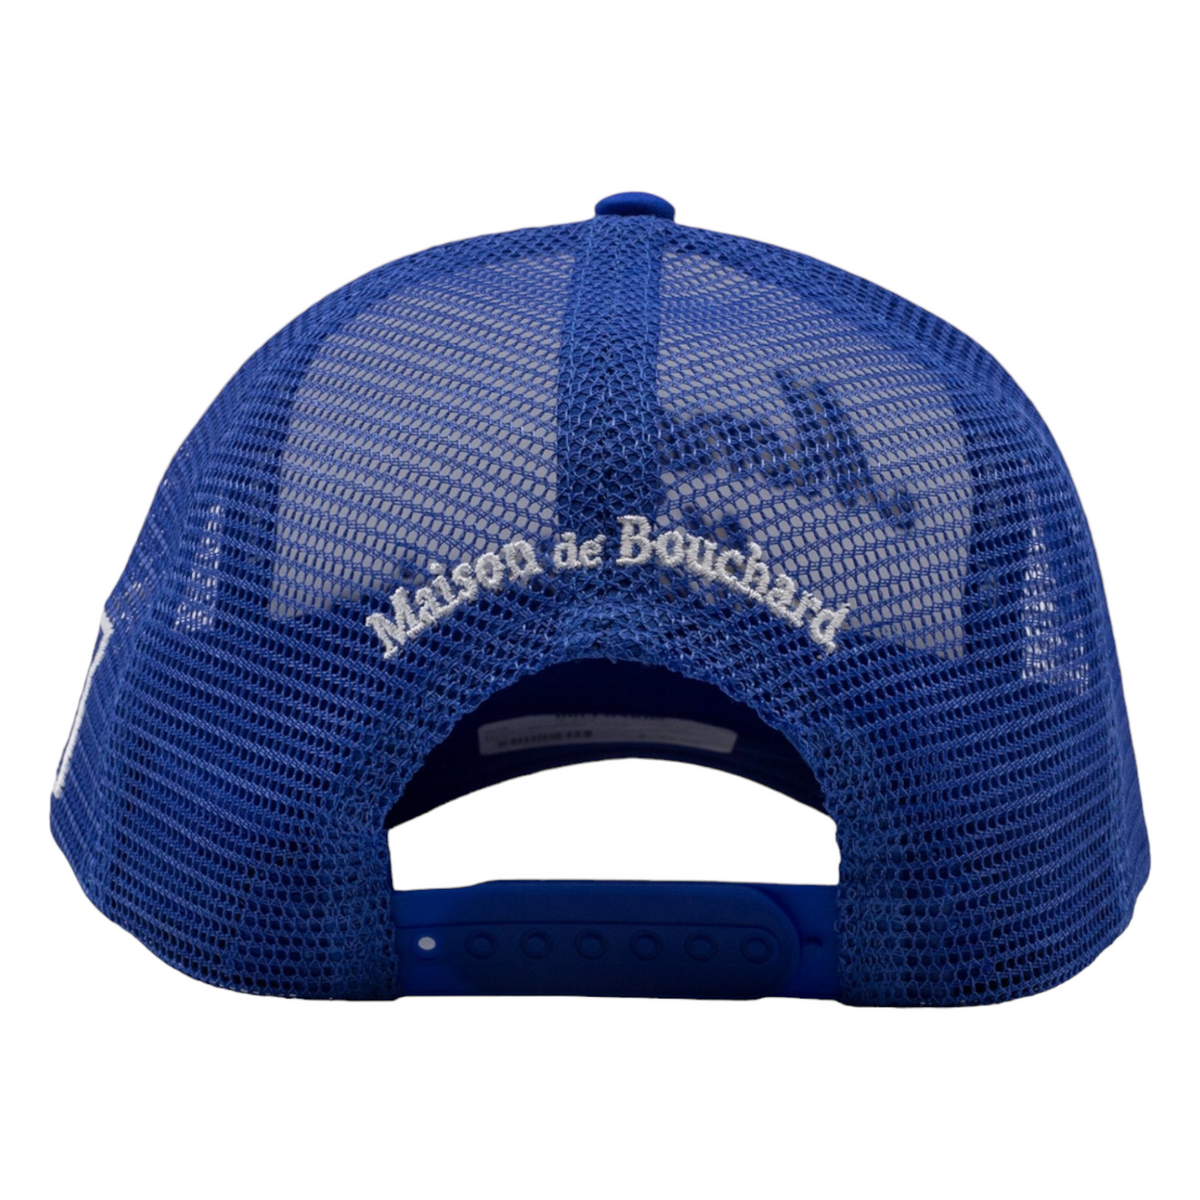 MDB Brand Money Makinaire Hat - Cool Color